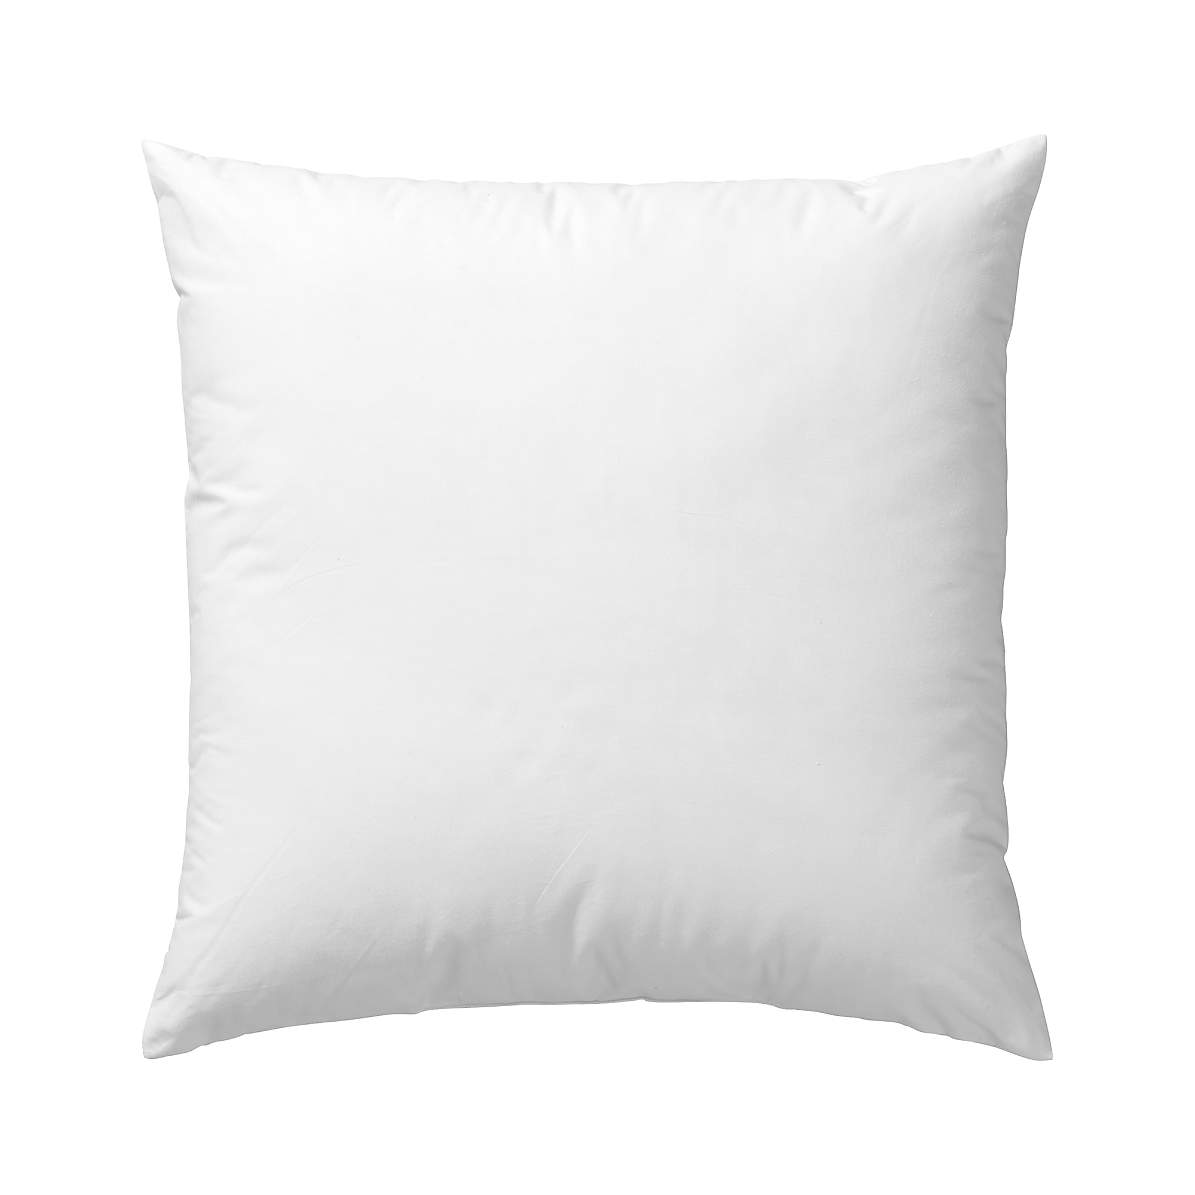 best down alternative pillow inserts